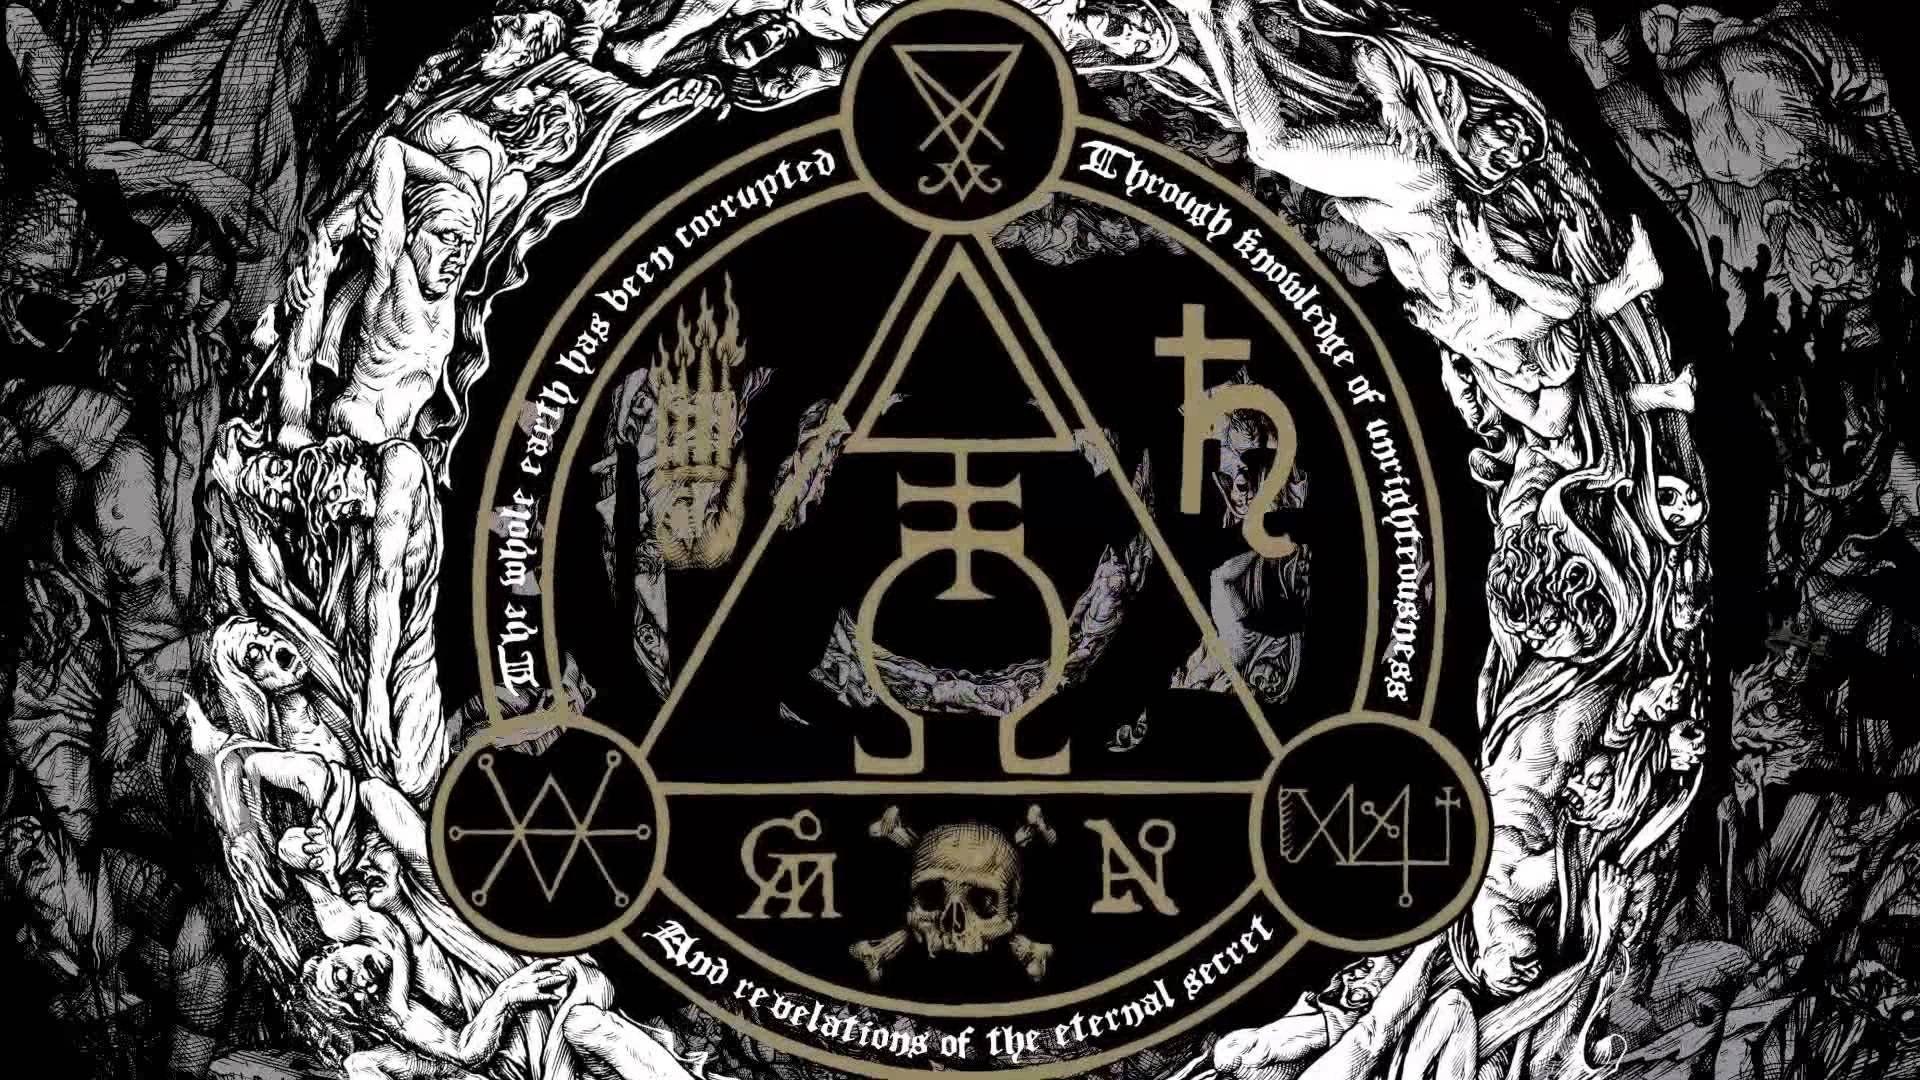 GOATWHORE black death metal heavy thrash dark evil occult satanic